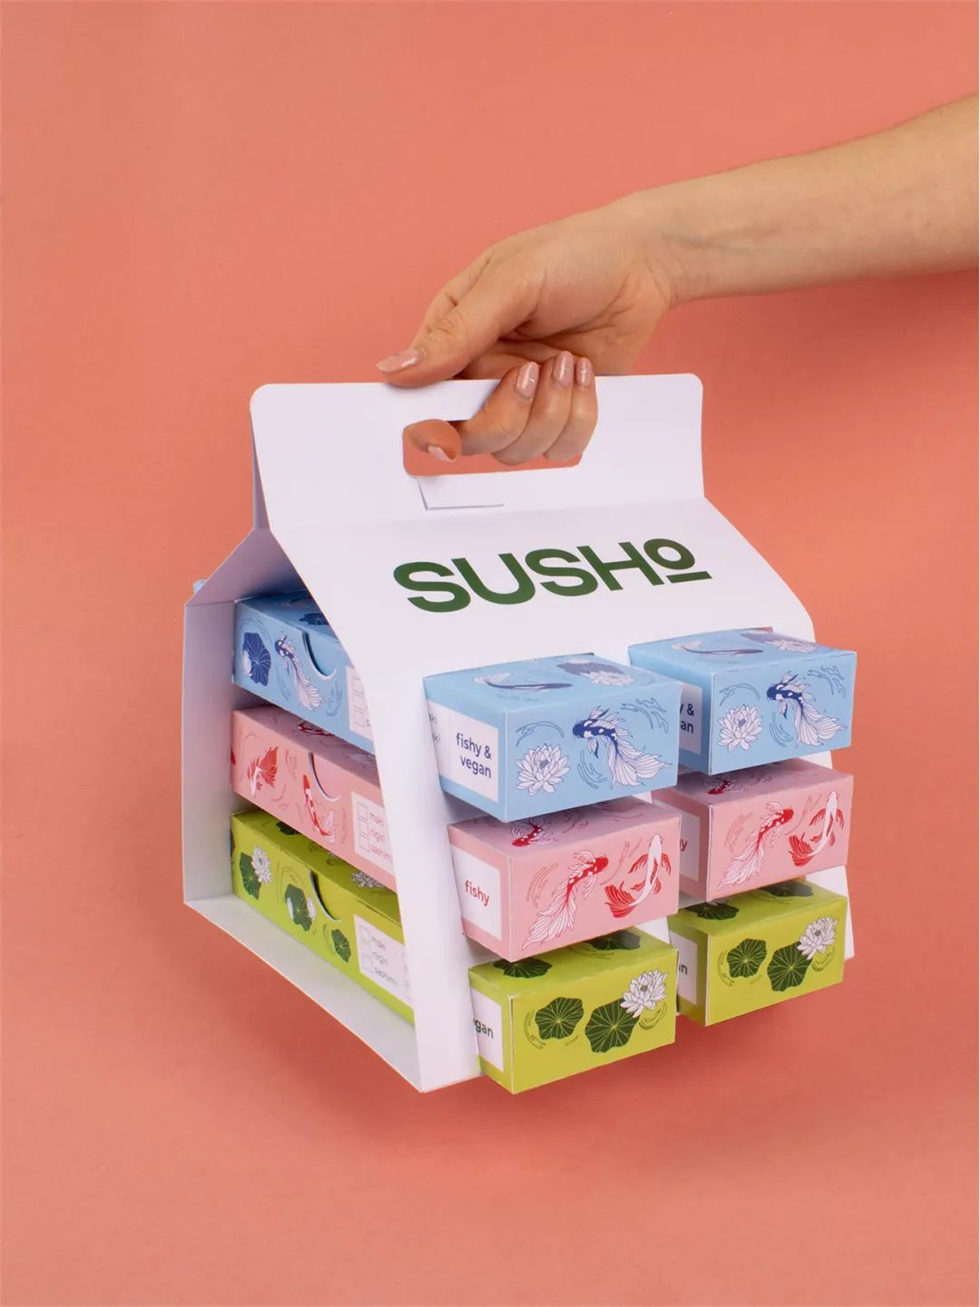 SUSHO寿司品牌包装设计